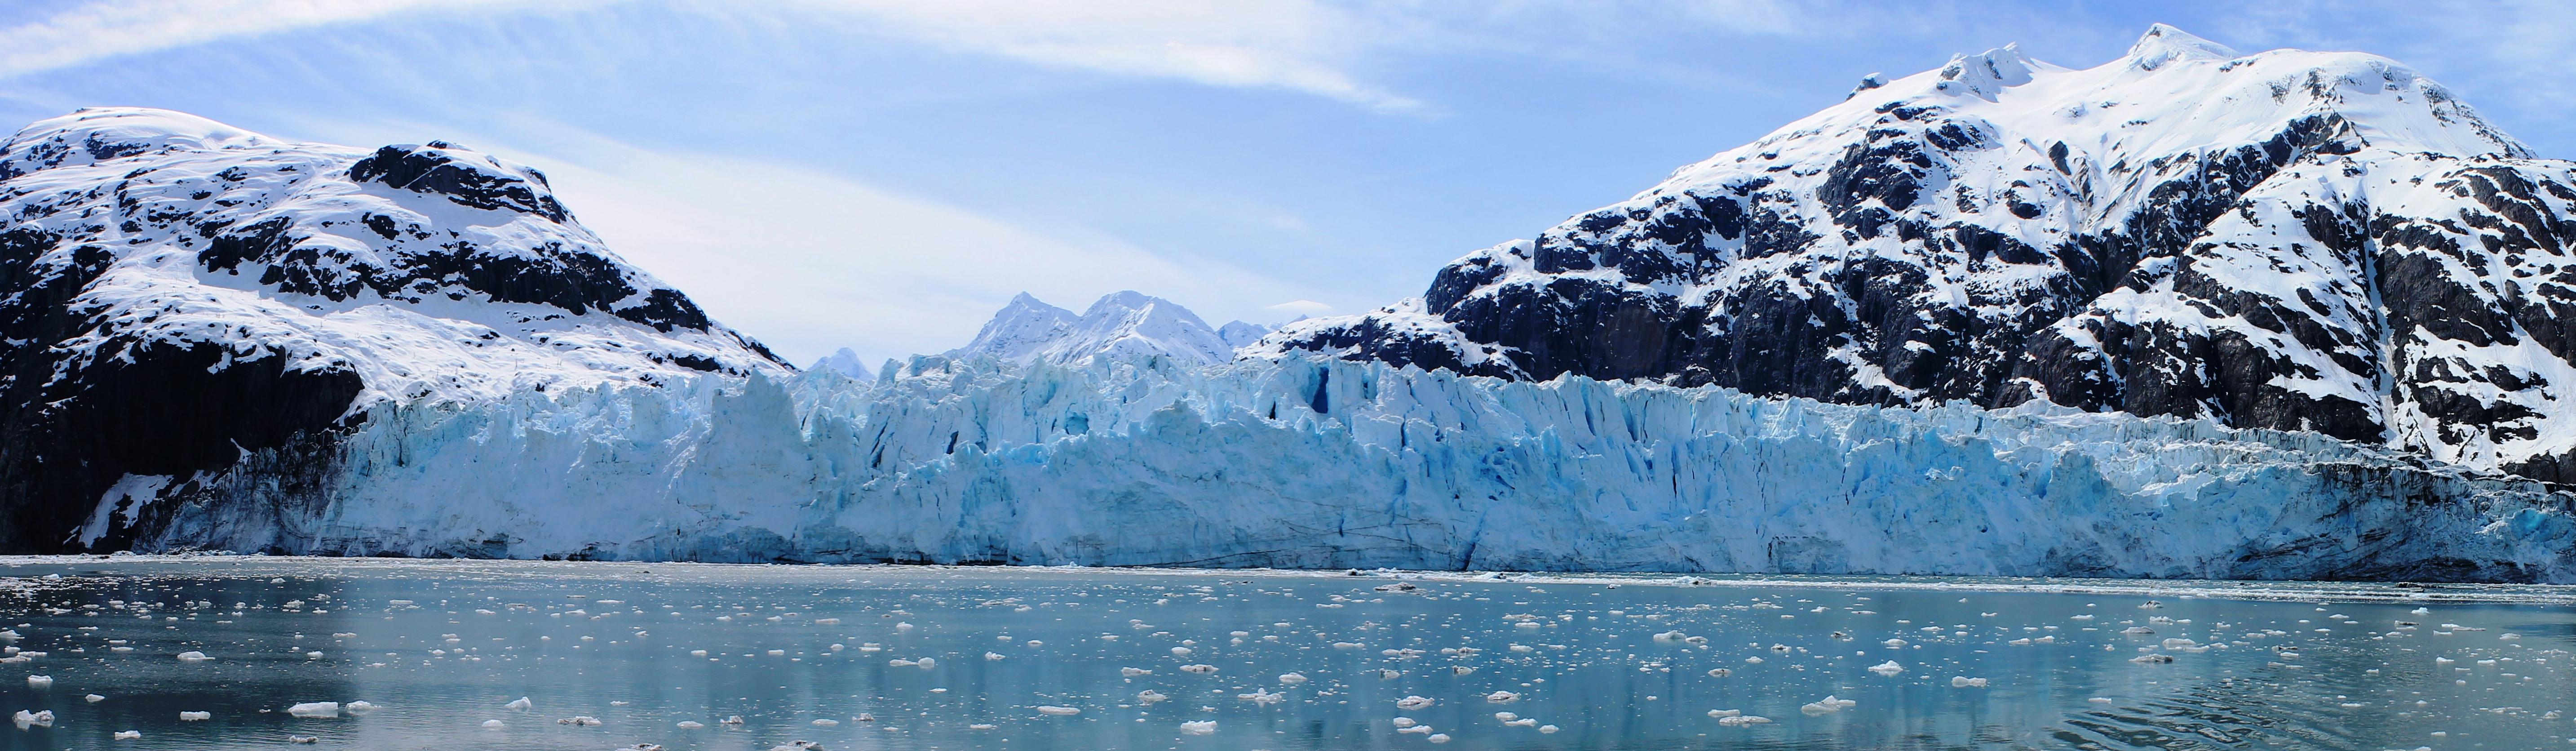 Icebergs, Glacier Bay National Park, Alaska без смс